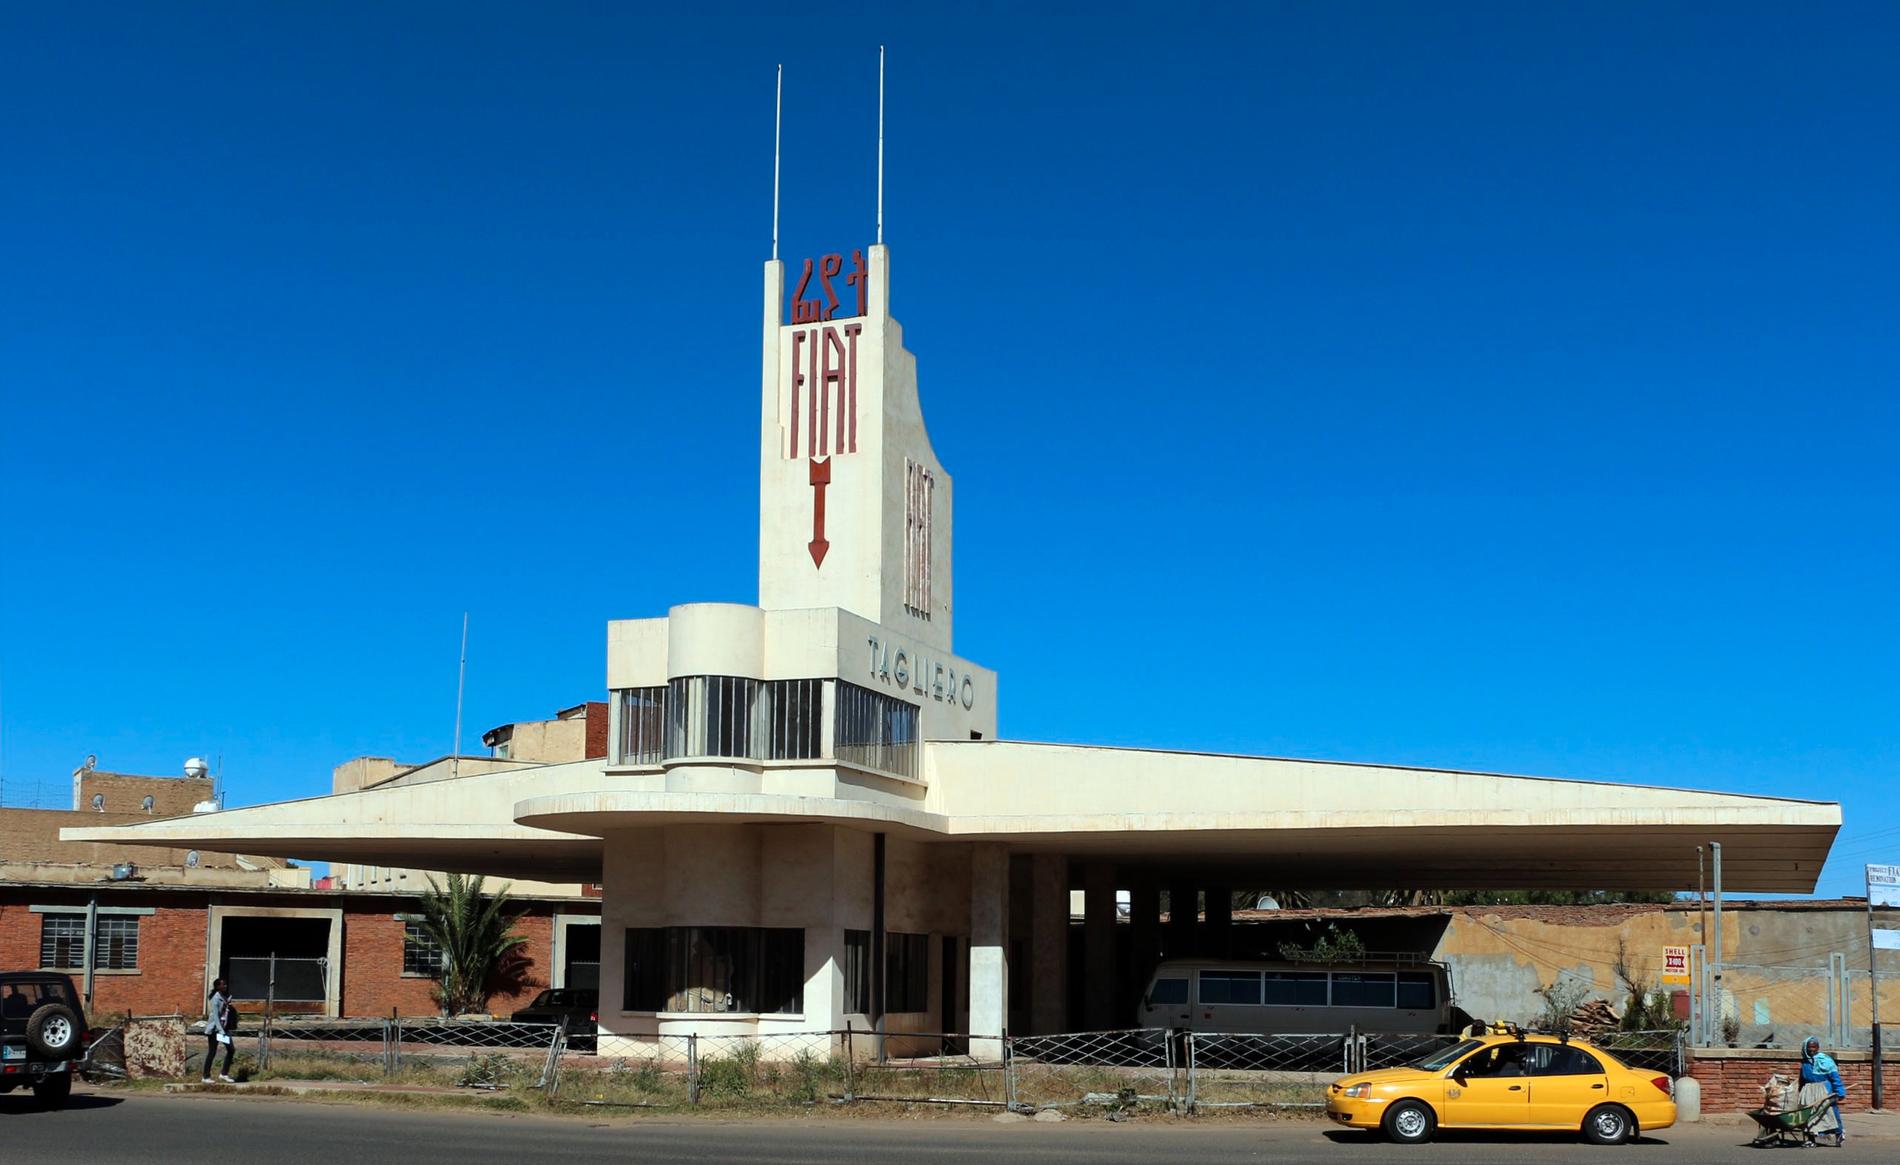 Bensinmacken Fiat Tagliero Building i Asmara, i futuristisk stil. 